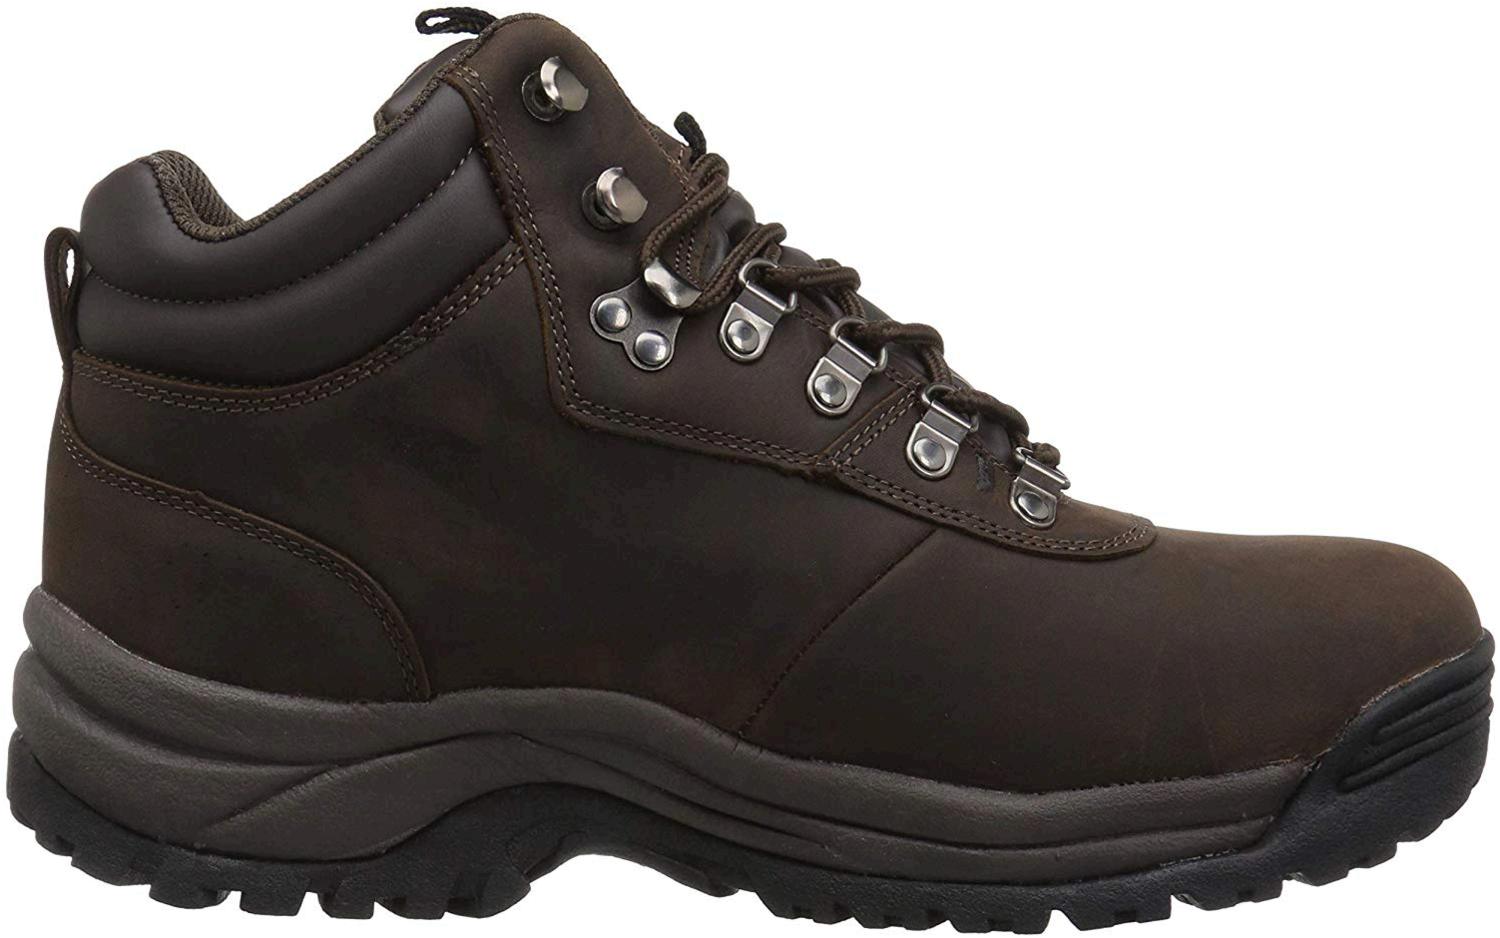 Propét Men's Cliff Walker Hiking Boot, Brown, Size 9.5 mQNT | eBay